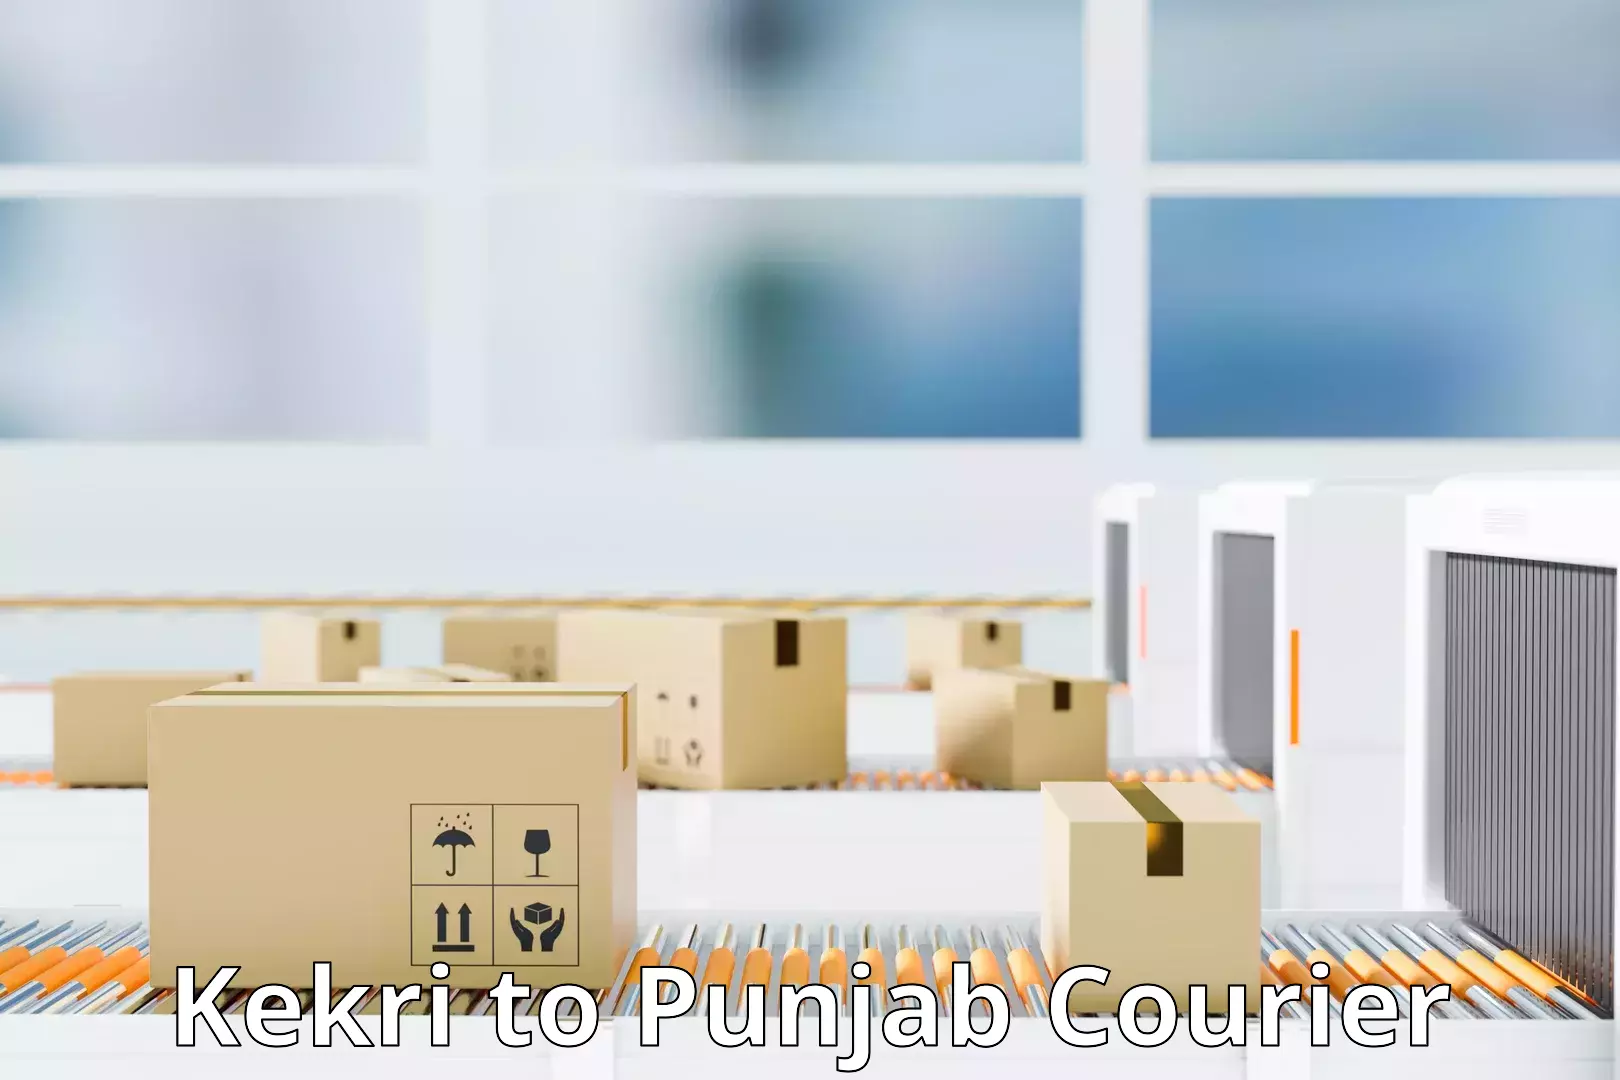 Supply chain efficiency Kekri to Punjab